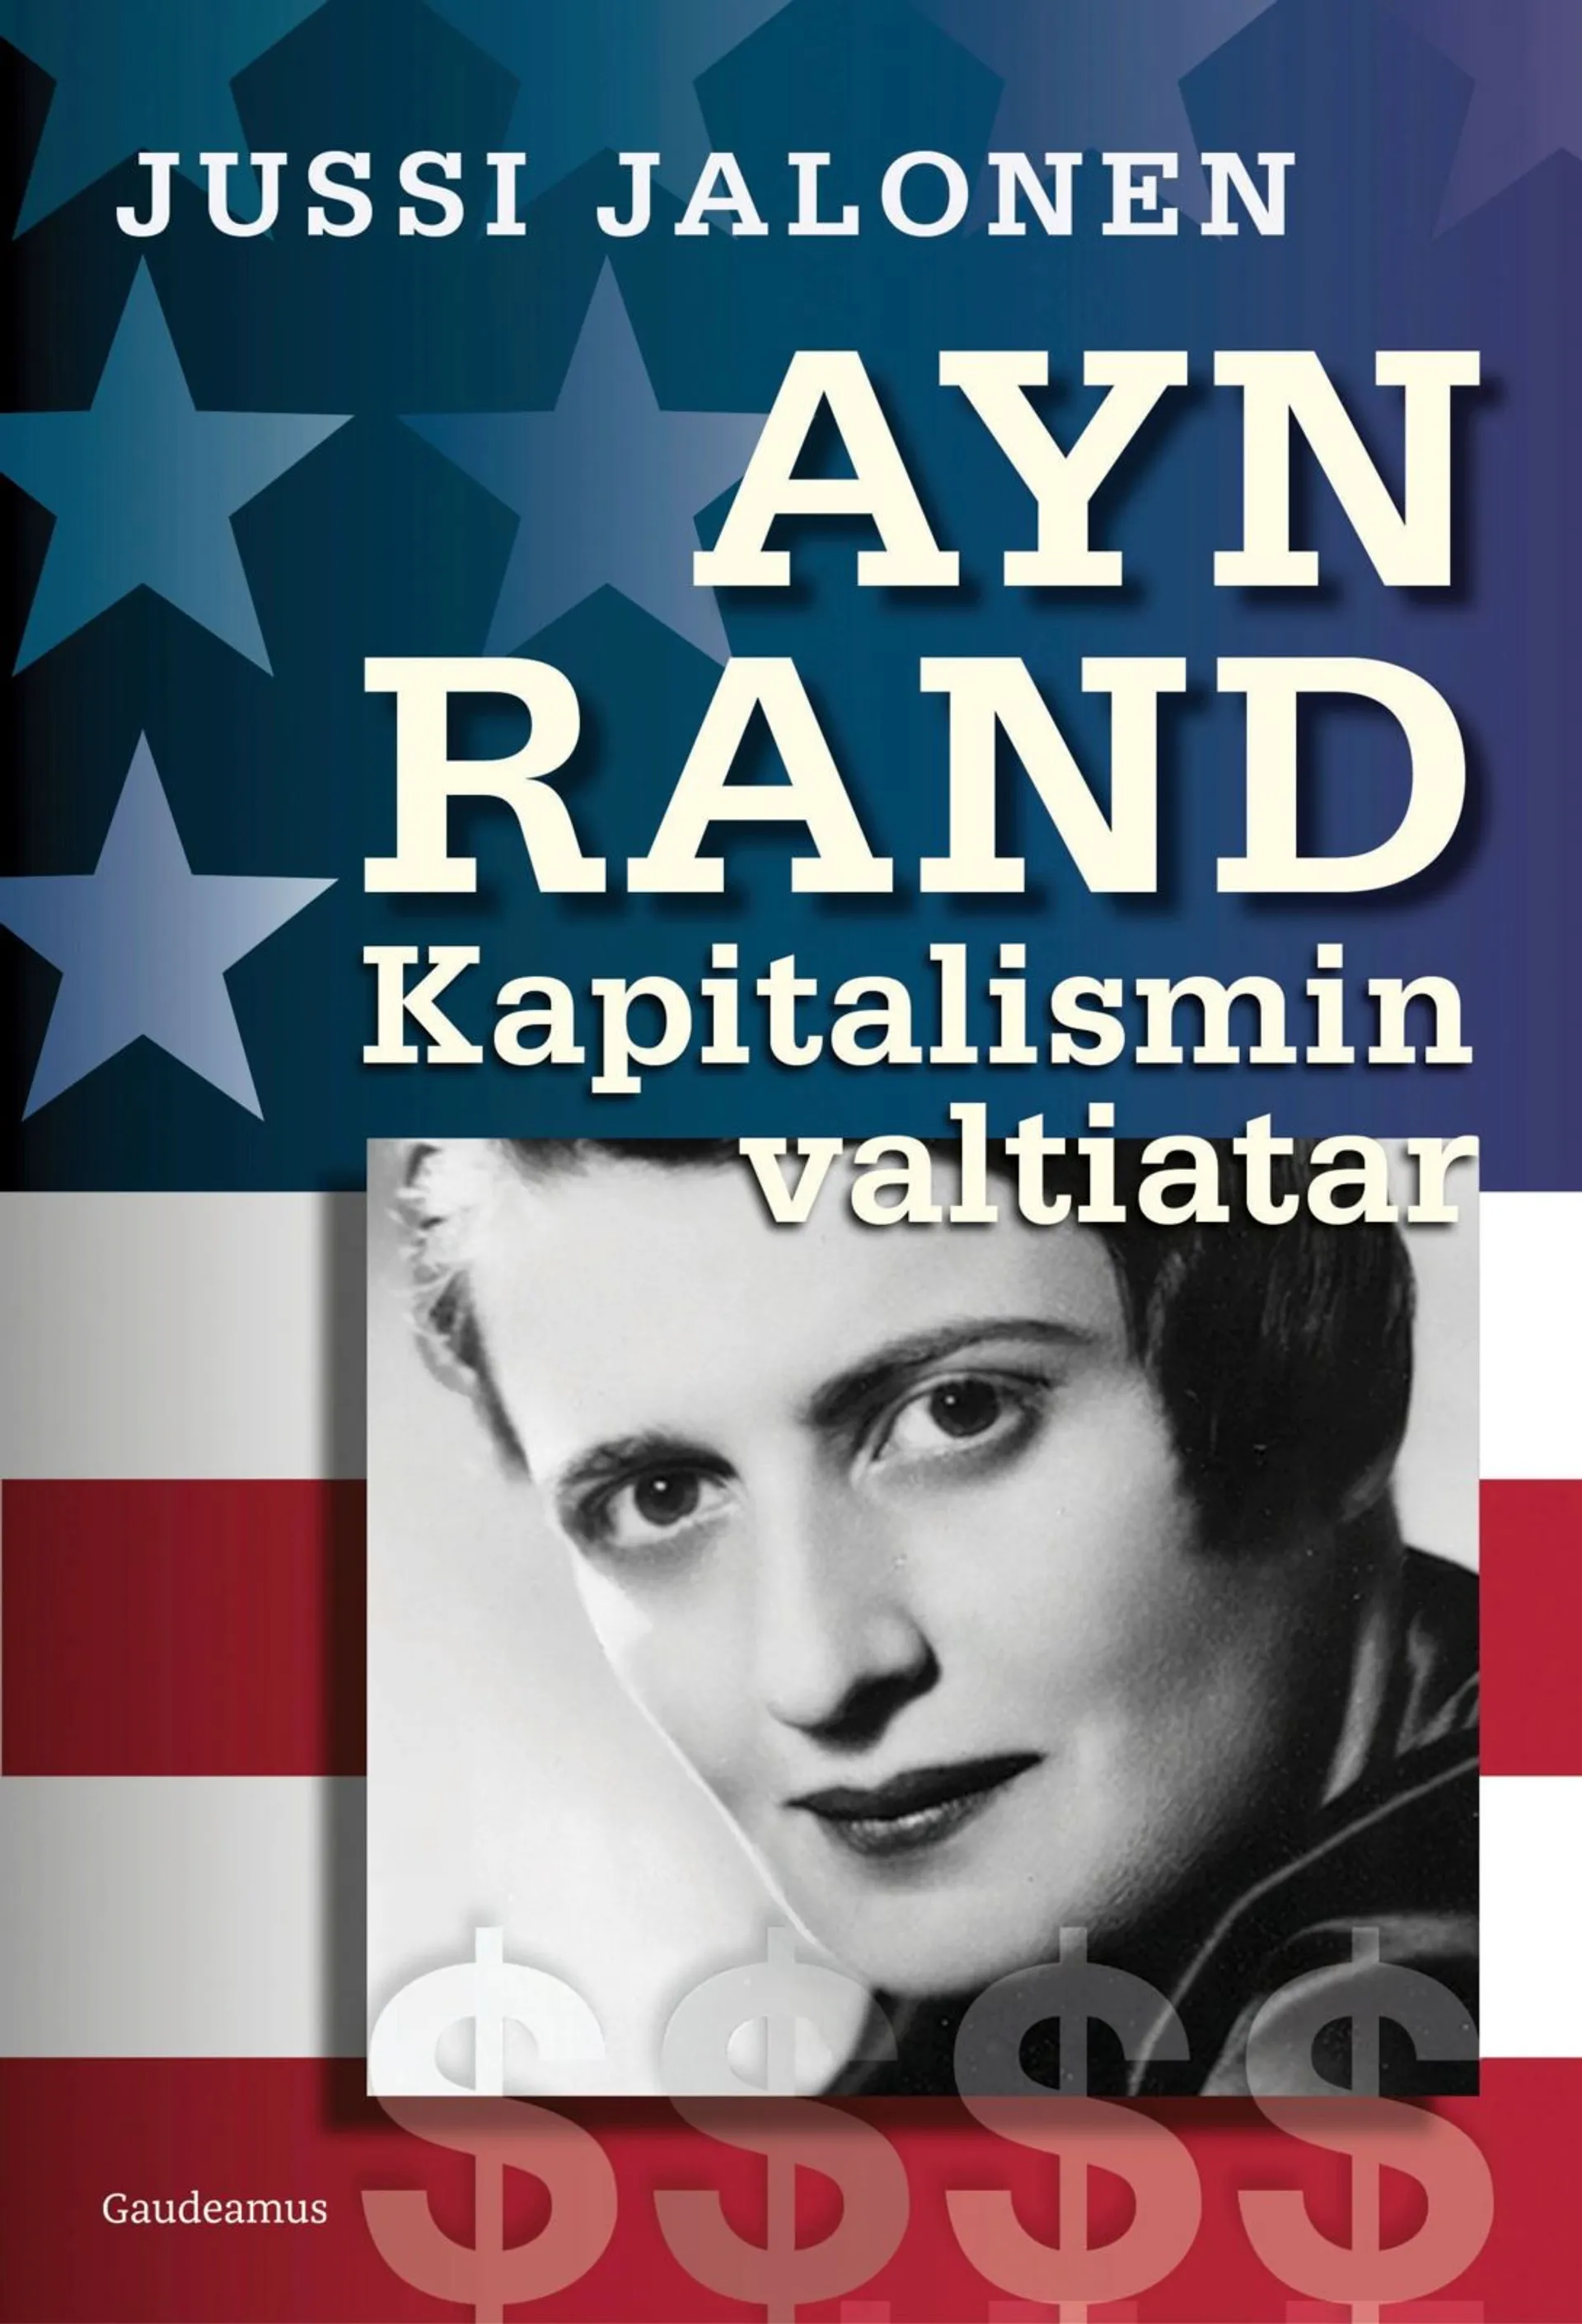 Jalonen, Ayn Rand